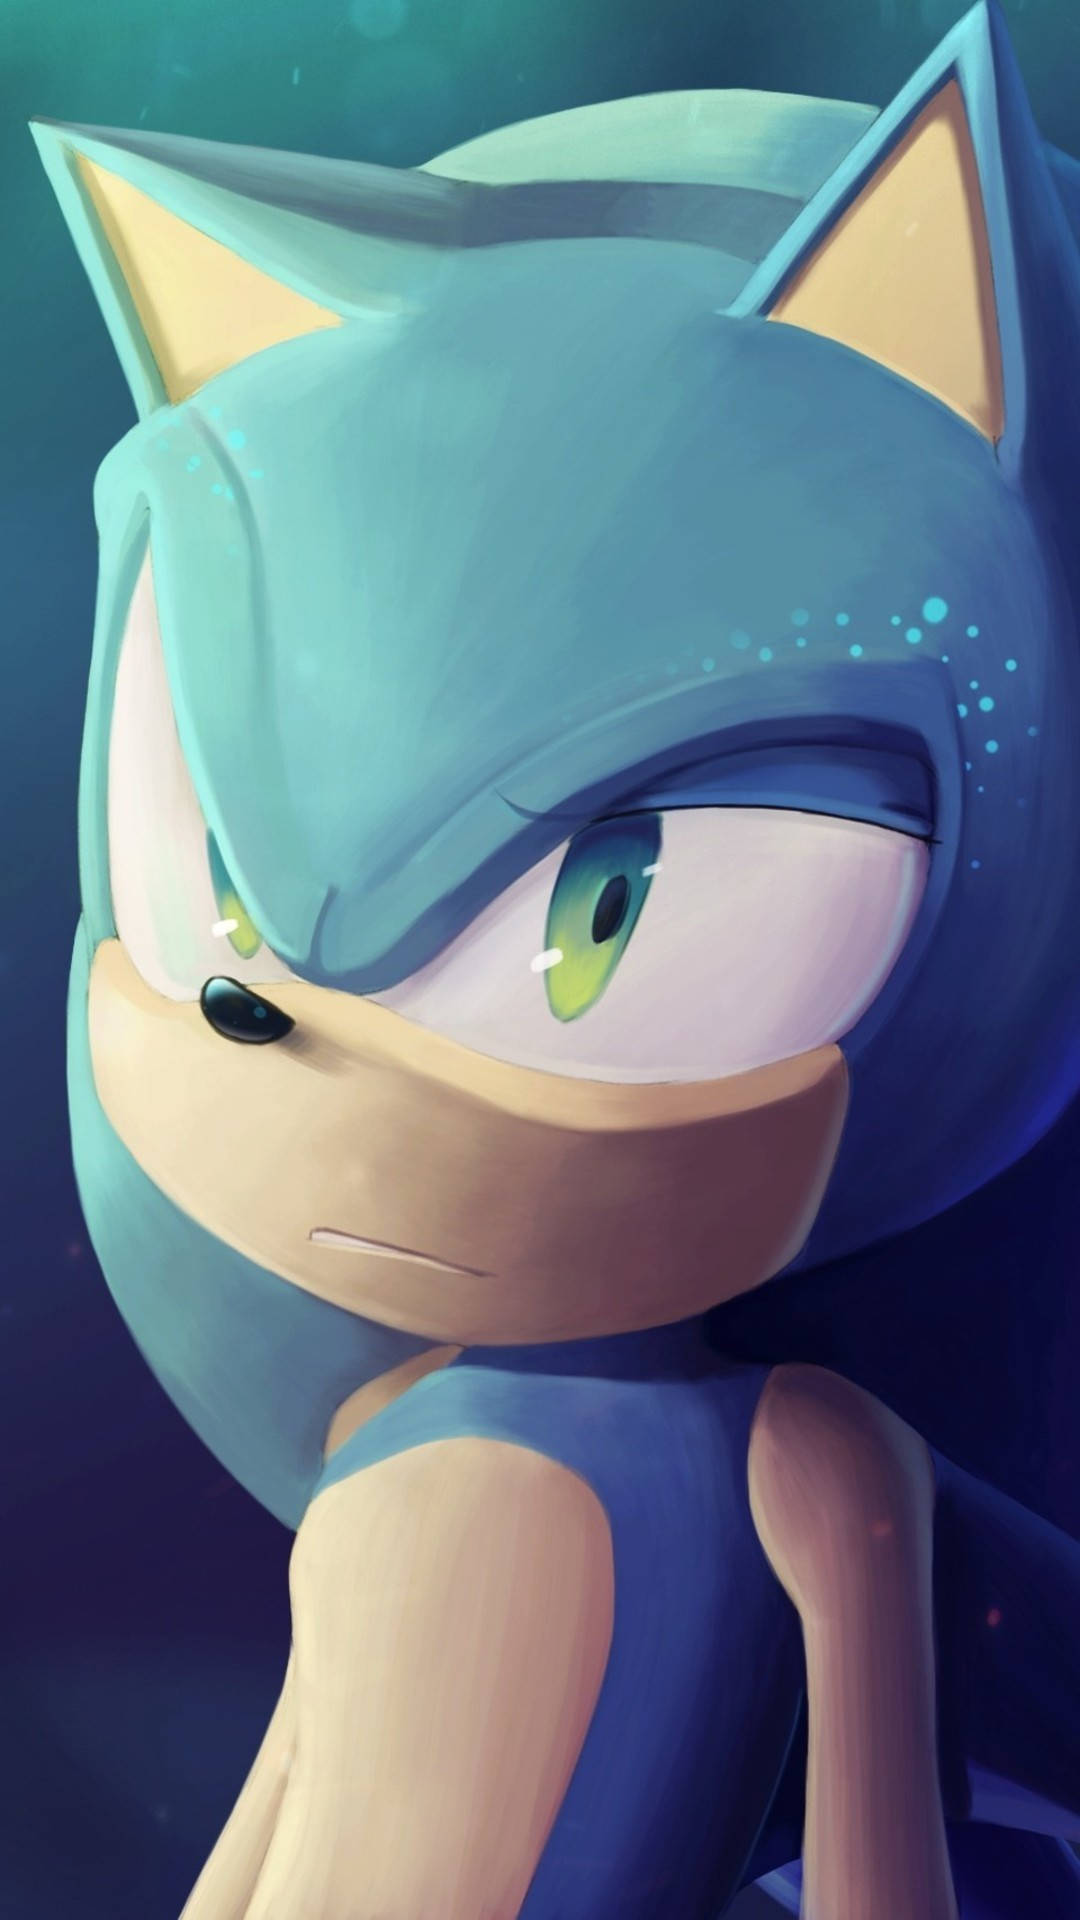 Sonic The Hedgehog By Sonicthehedgehog Wallpaper